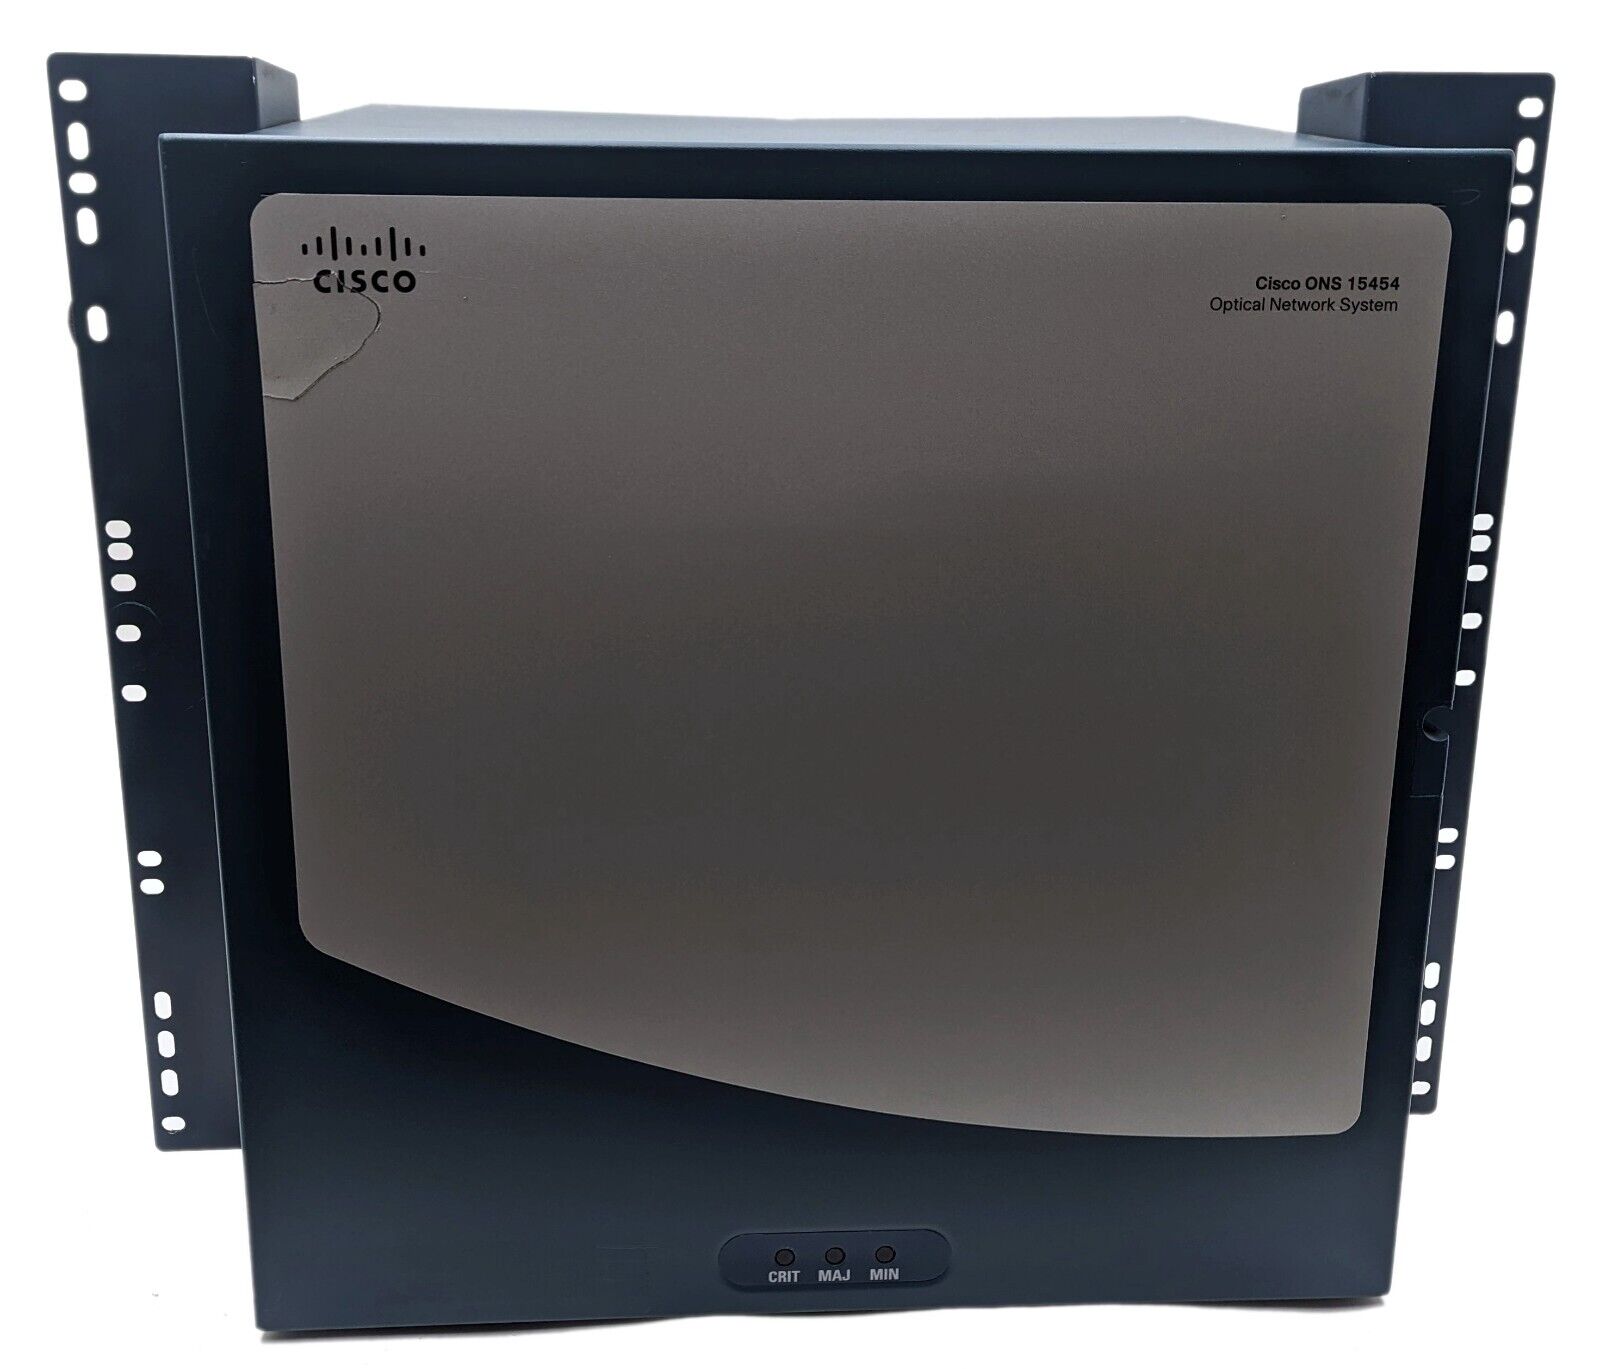 Cisco ONS 15454-SA-HD-DDR 17-Slot Optical Network System Chassis & EIA I/O Panel